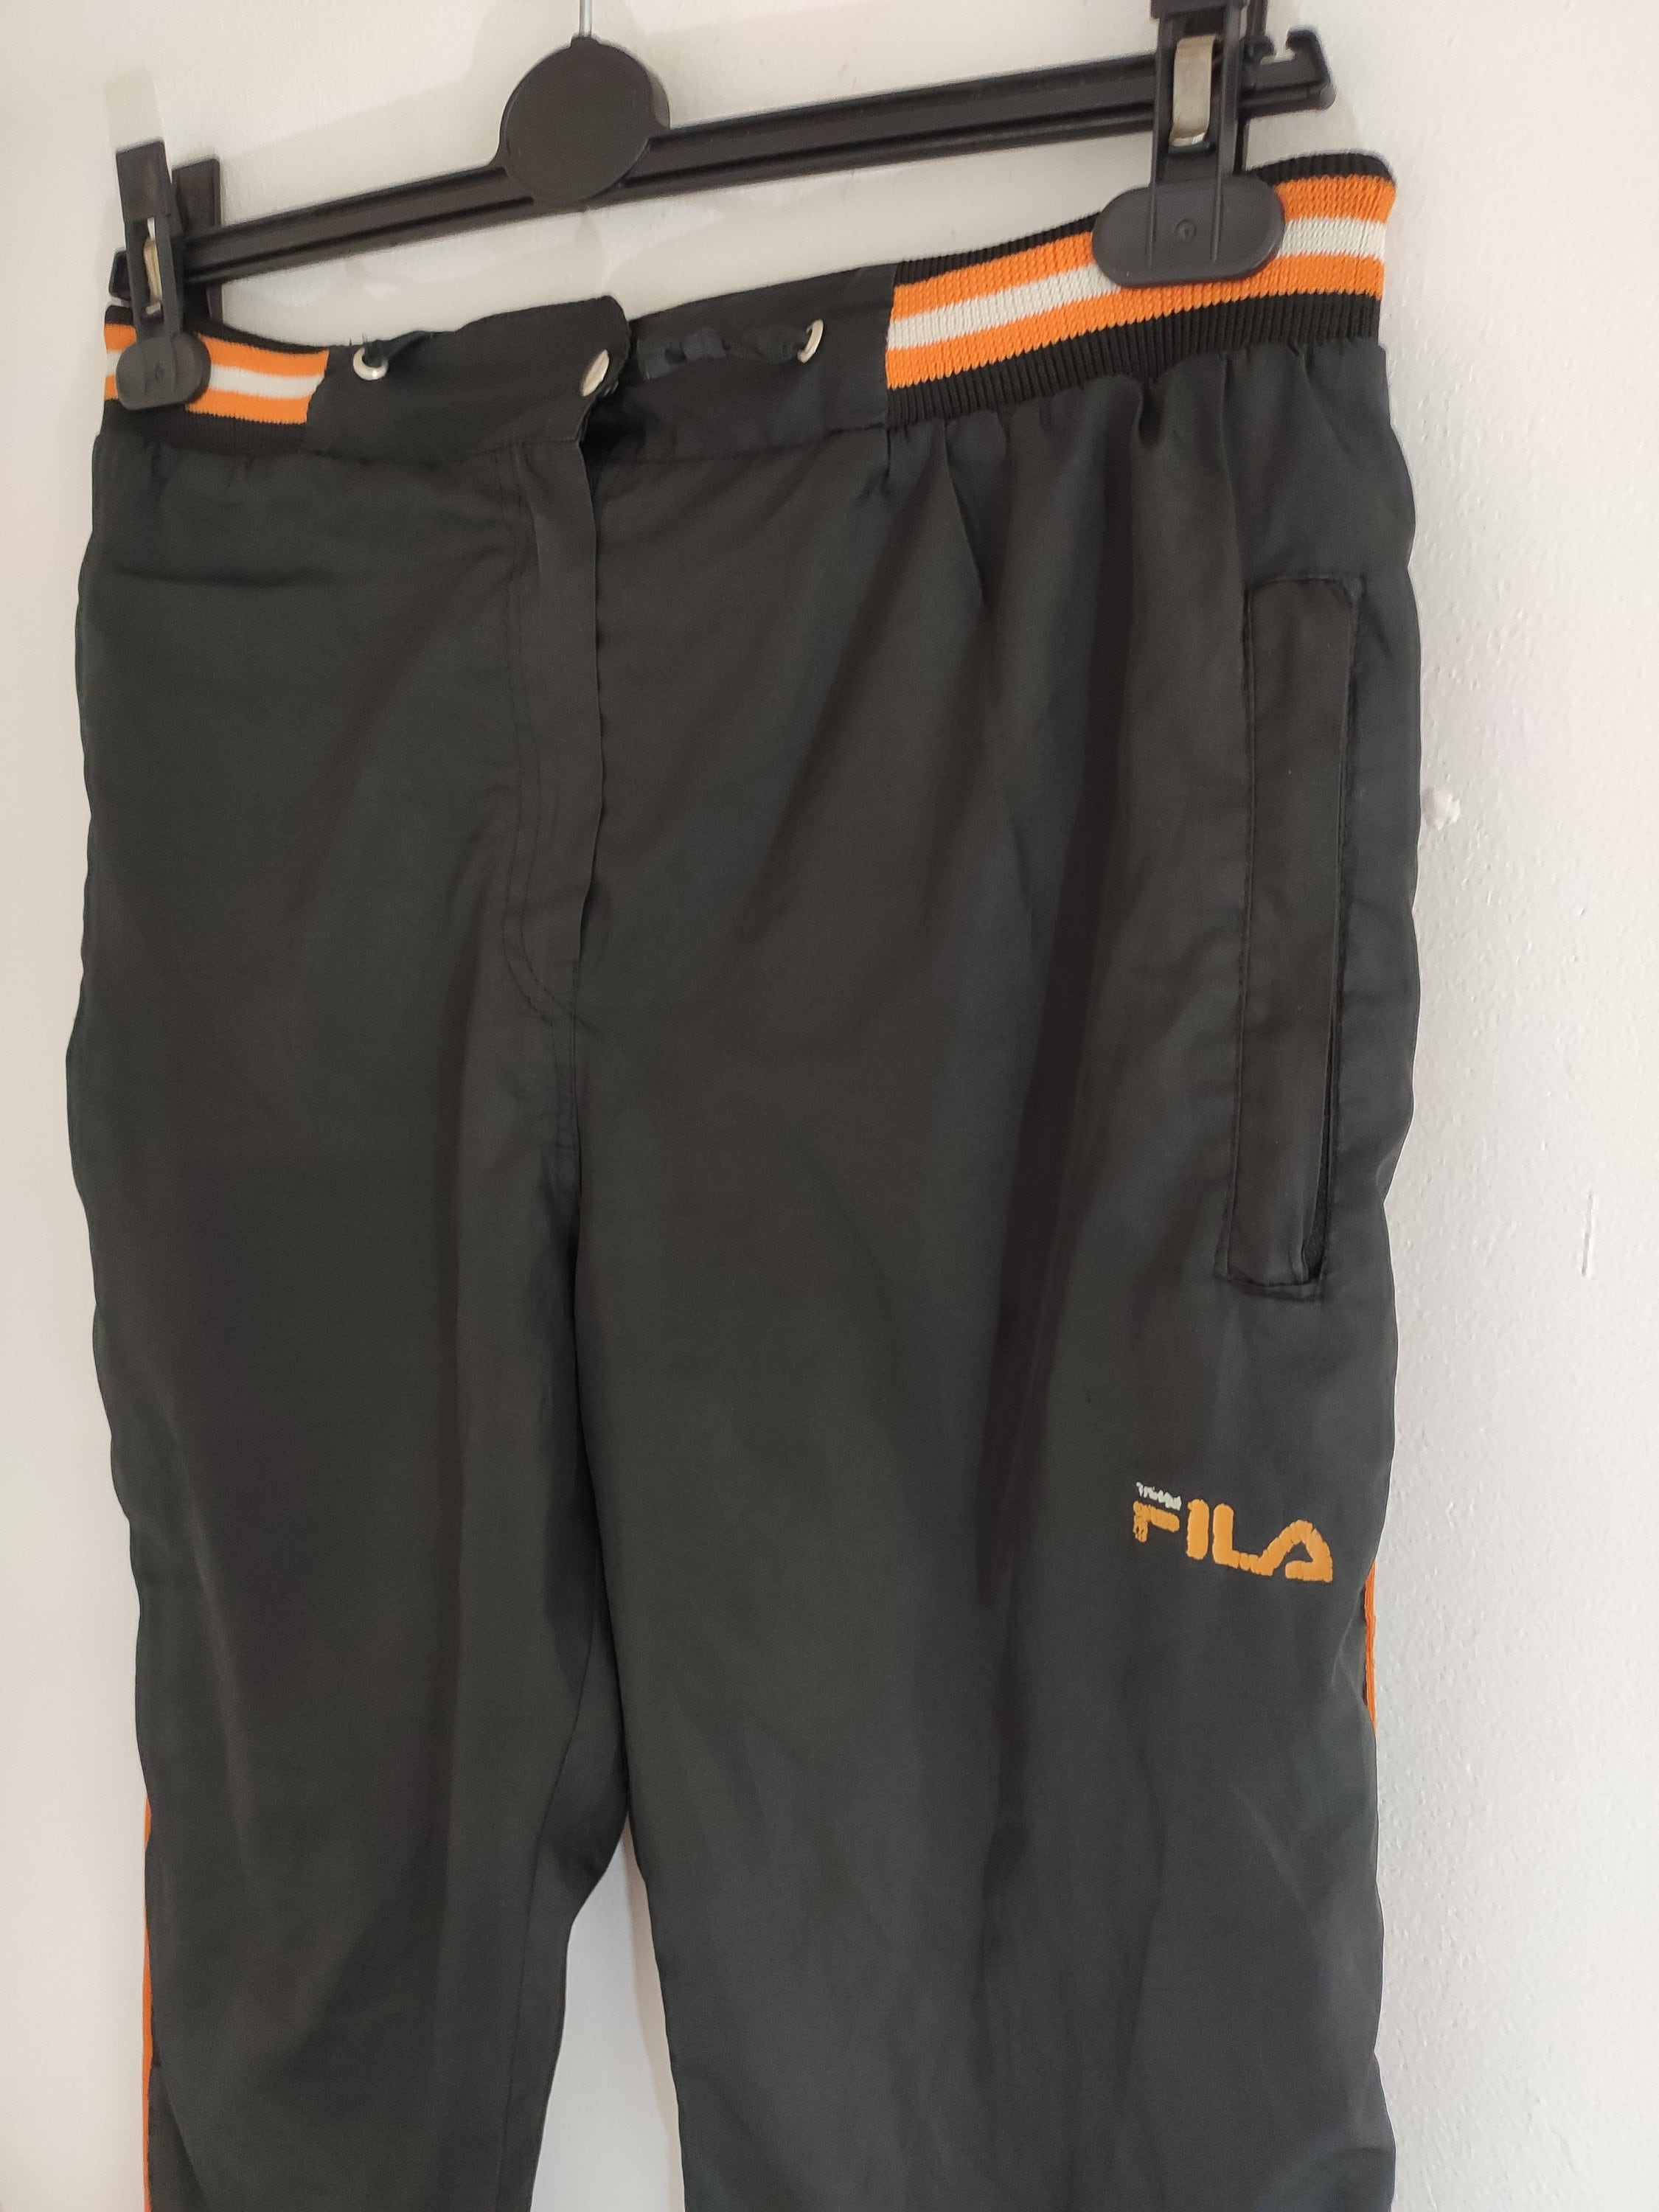 FILA Black Track Pants 816 